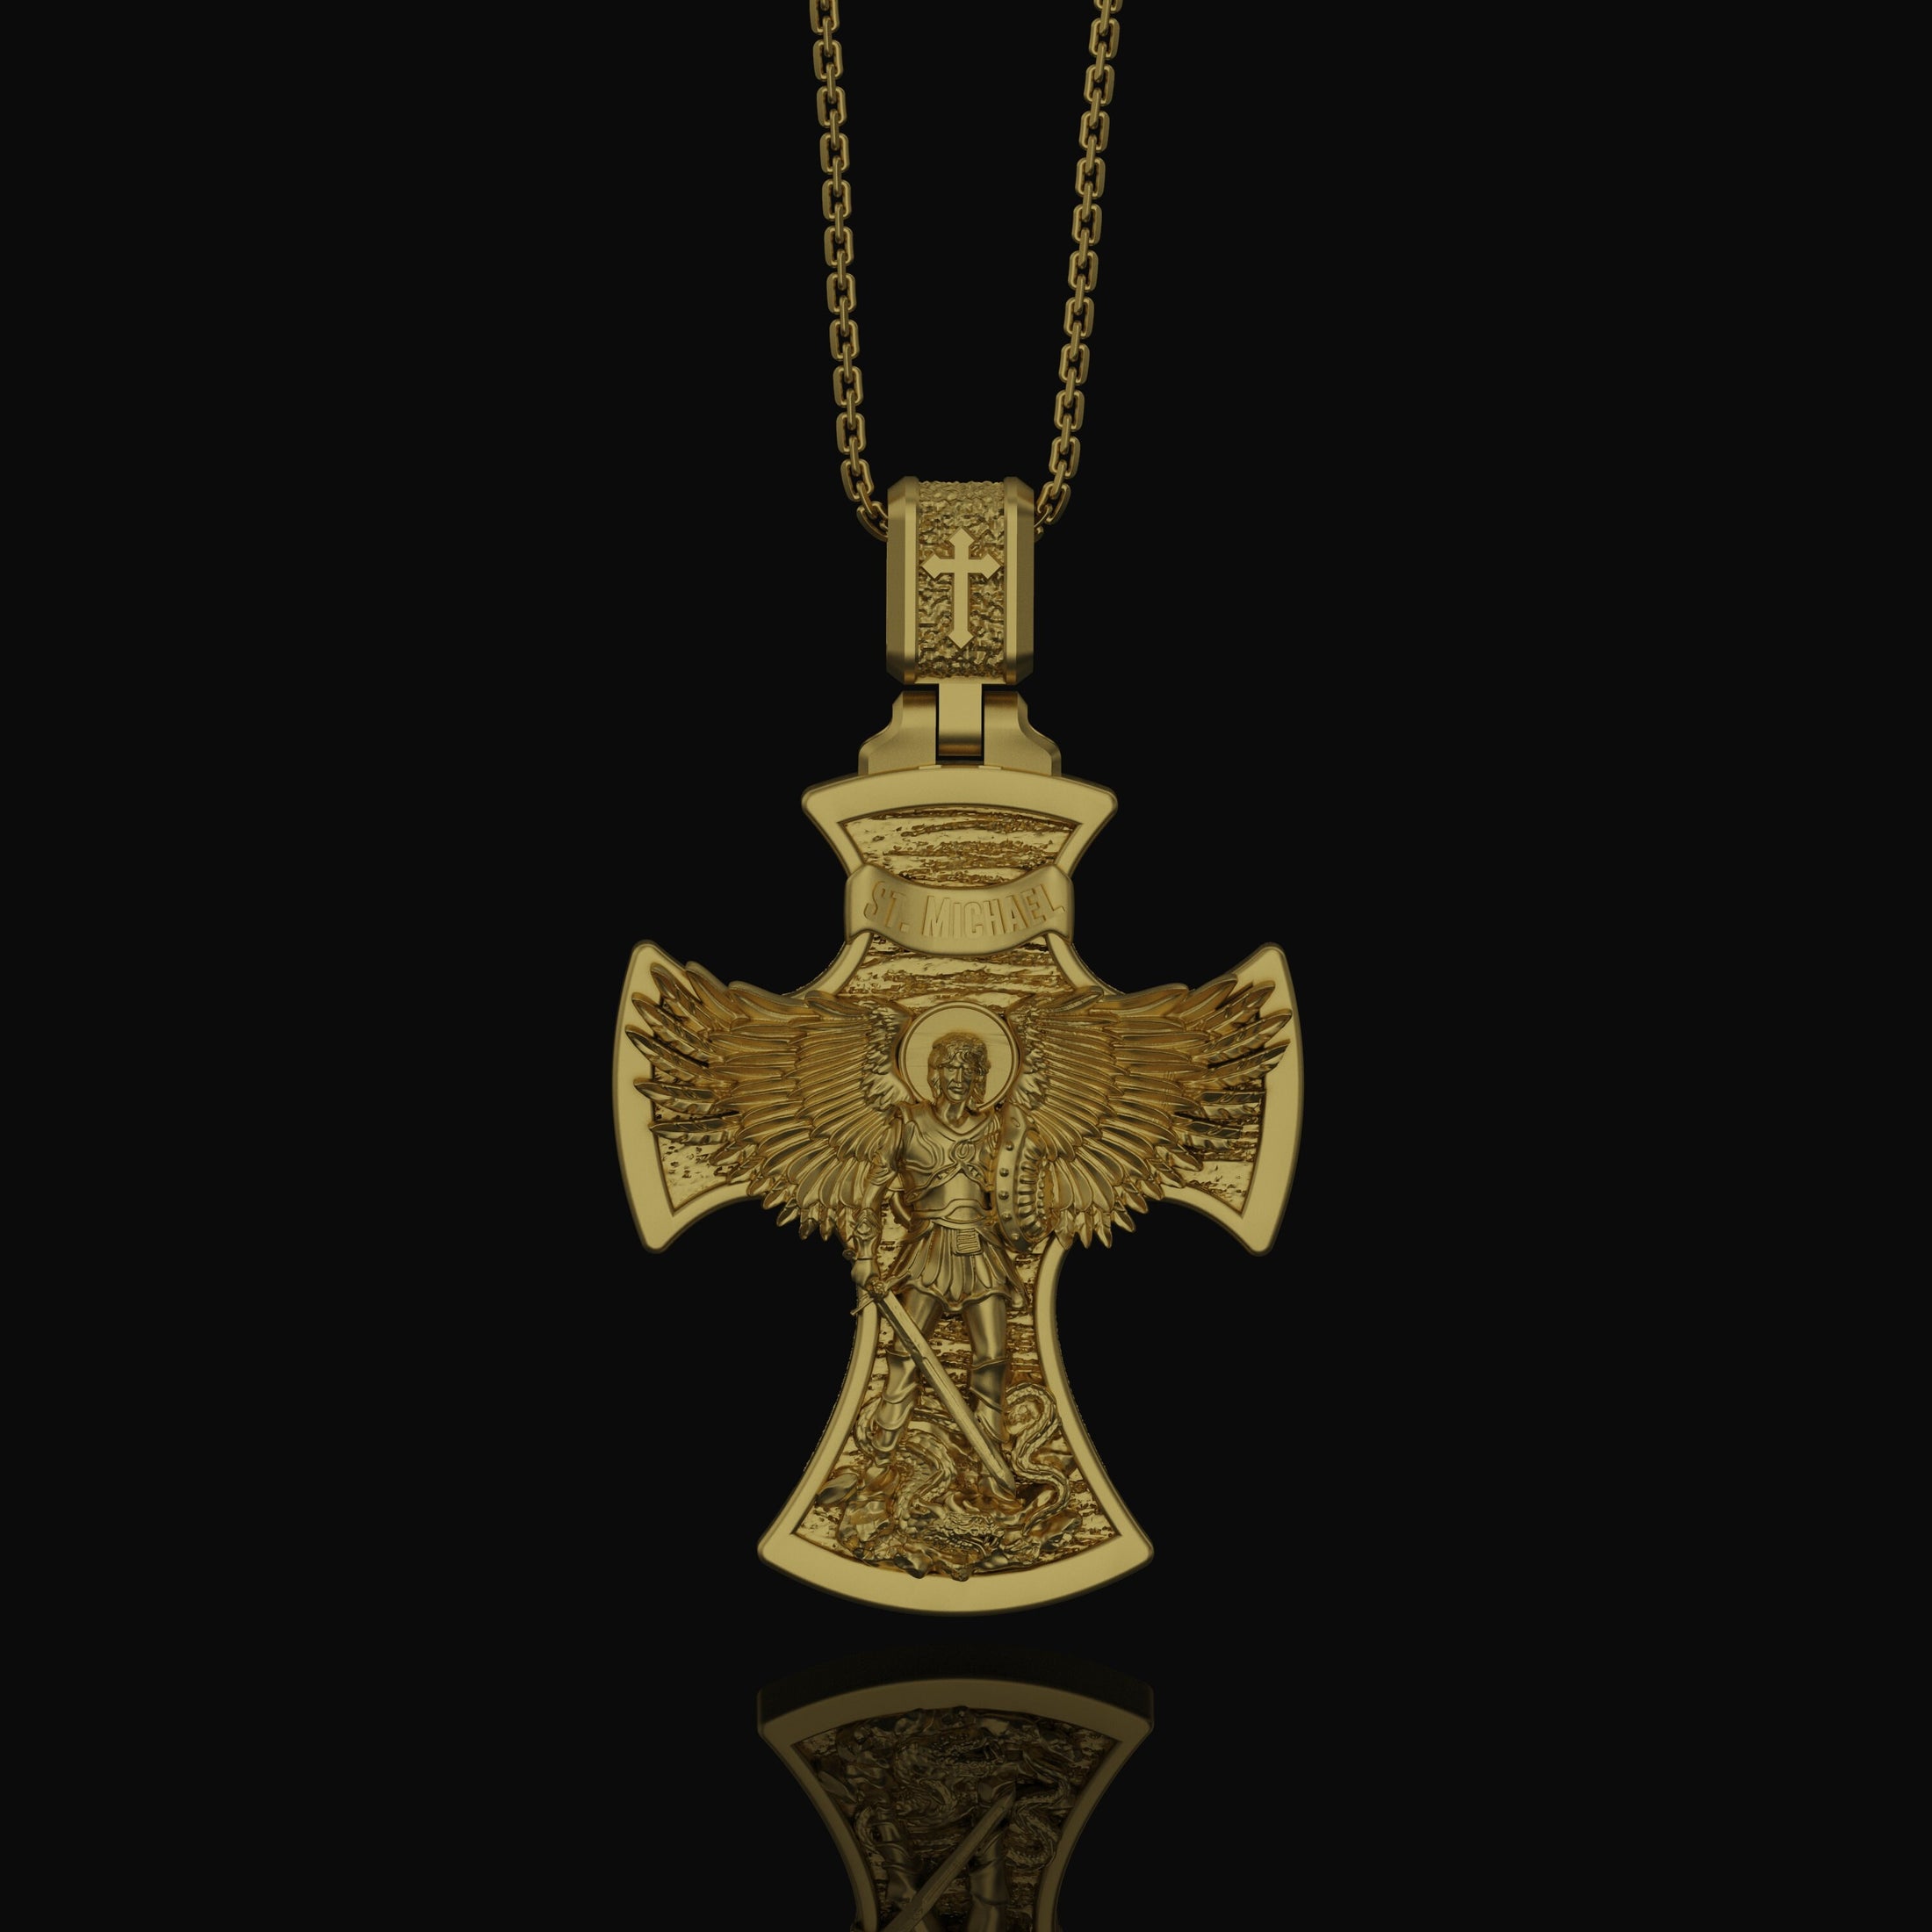 Silver Saint Michael Necklace - Archangel Michael Pendant, Protector Saint Jewelry, Spiritual Gift, Christian Gift